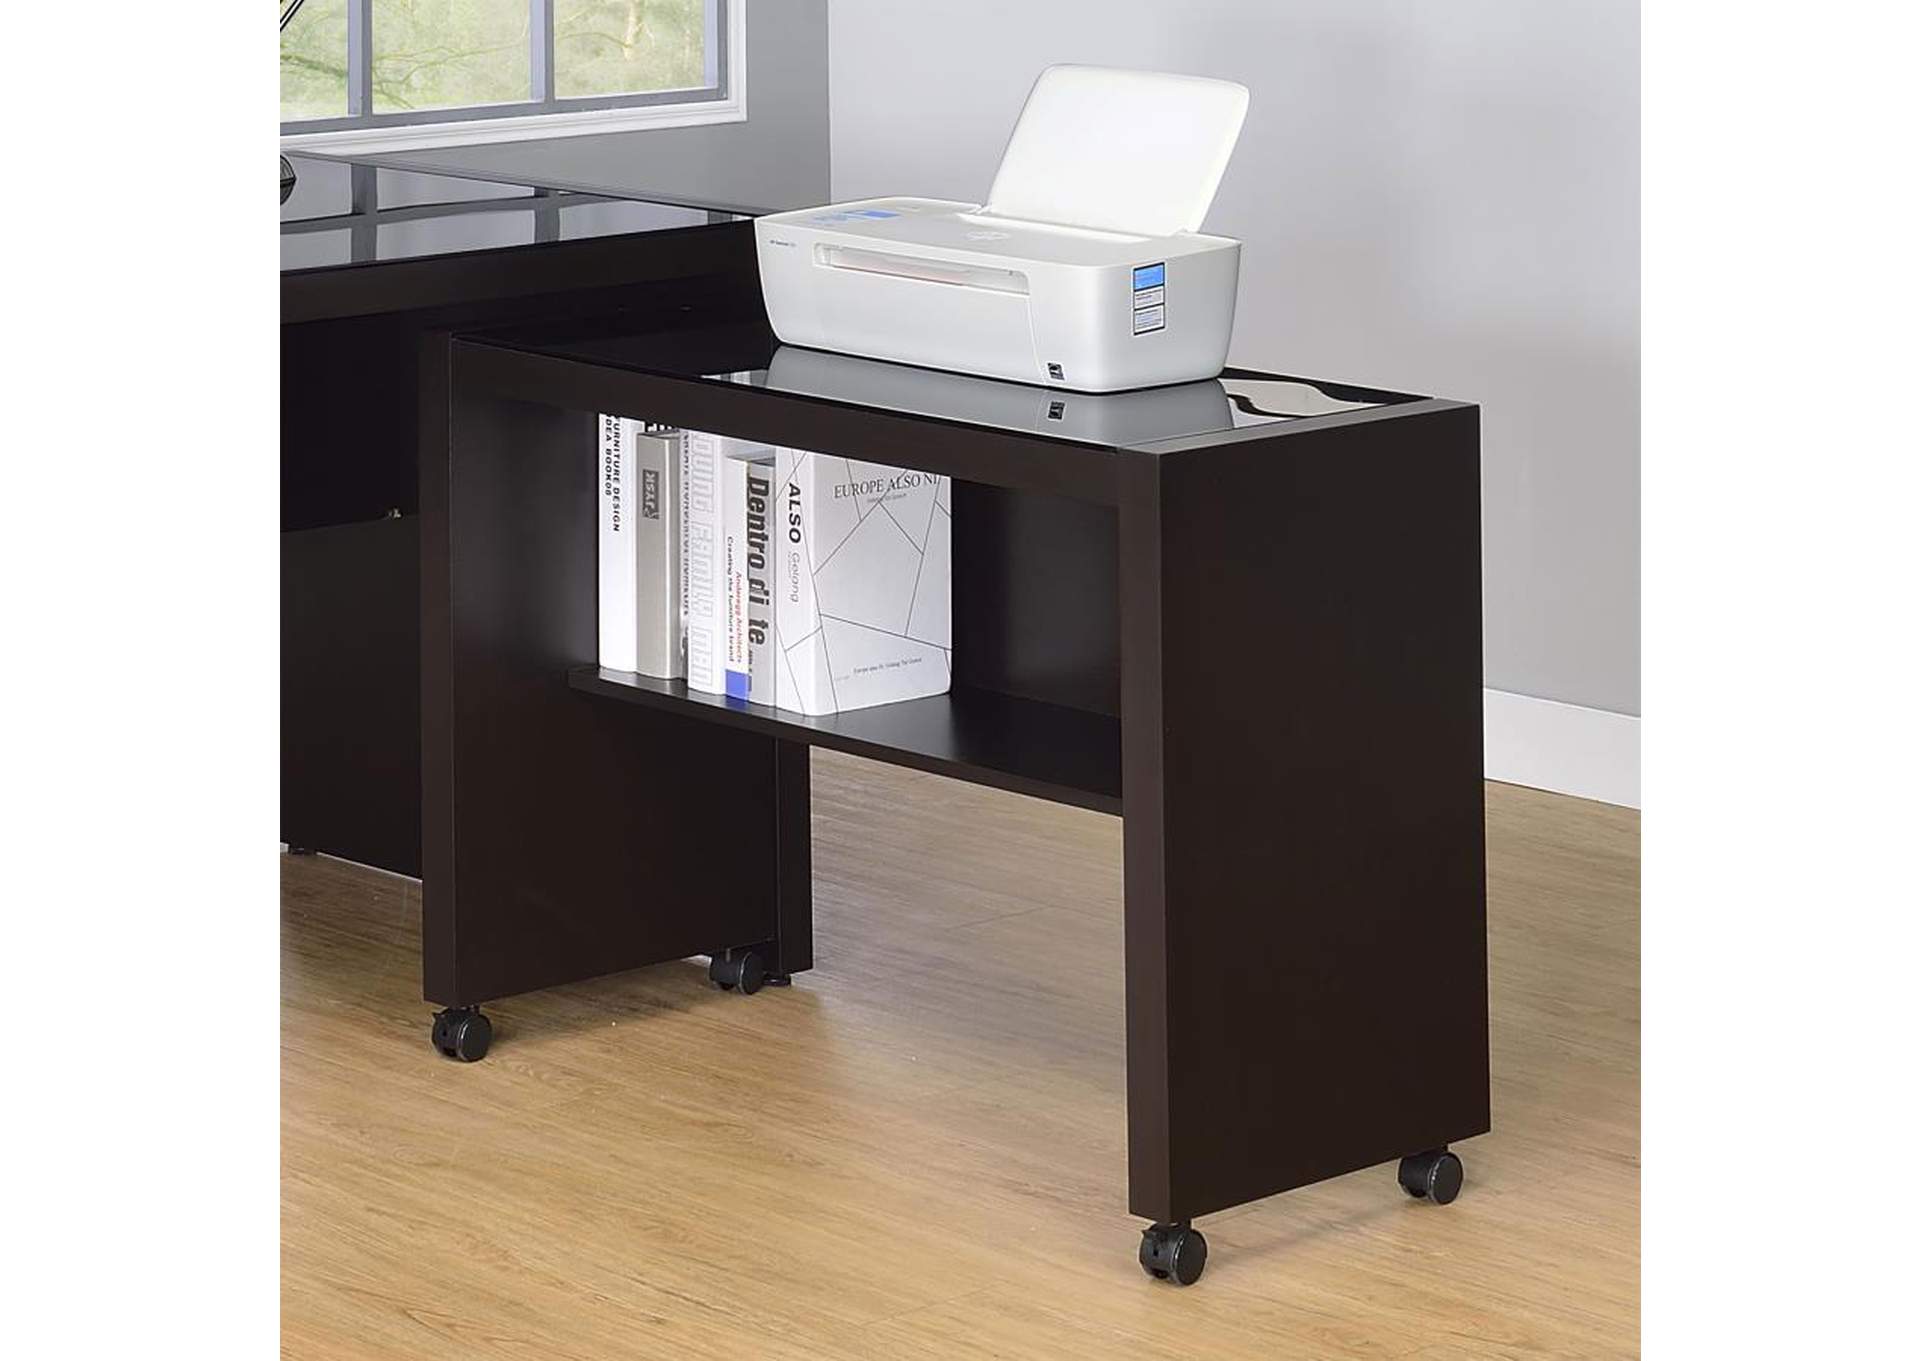 Mueble para impresora  Computer desk design, Office design, Desk design